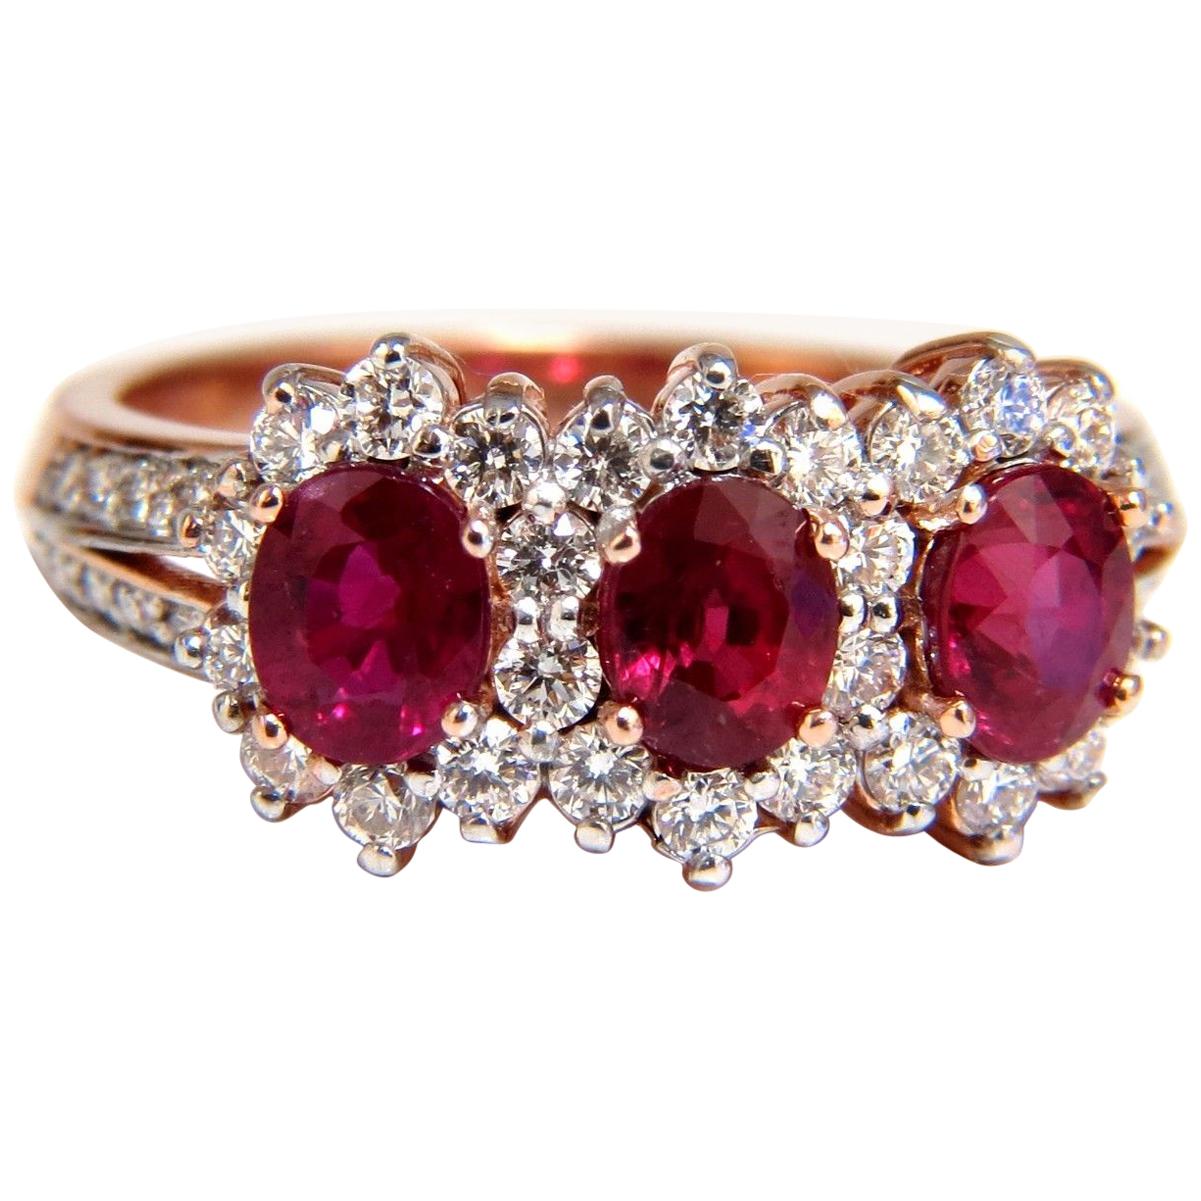 2.55 Carat Natural Vivid Red Ruby Diamonds Ring 14 Karat Three-Stone Halo Class